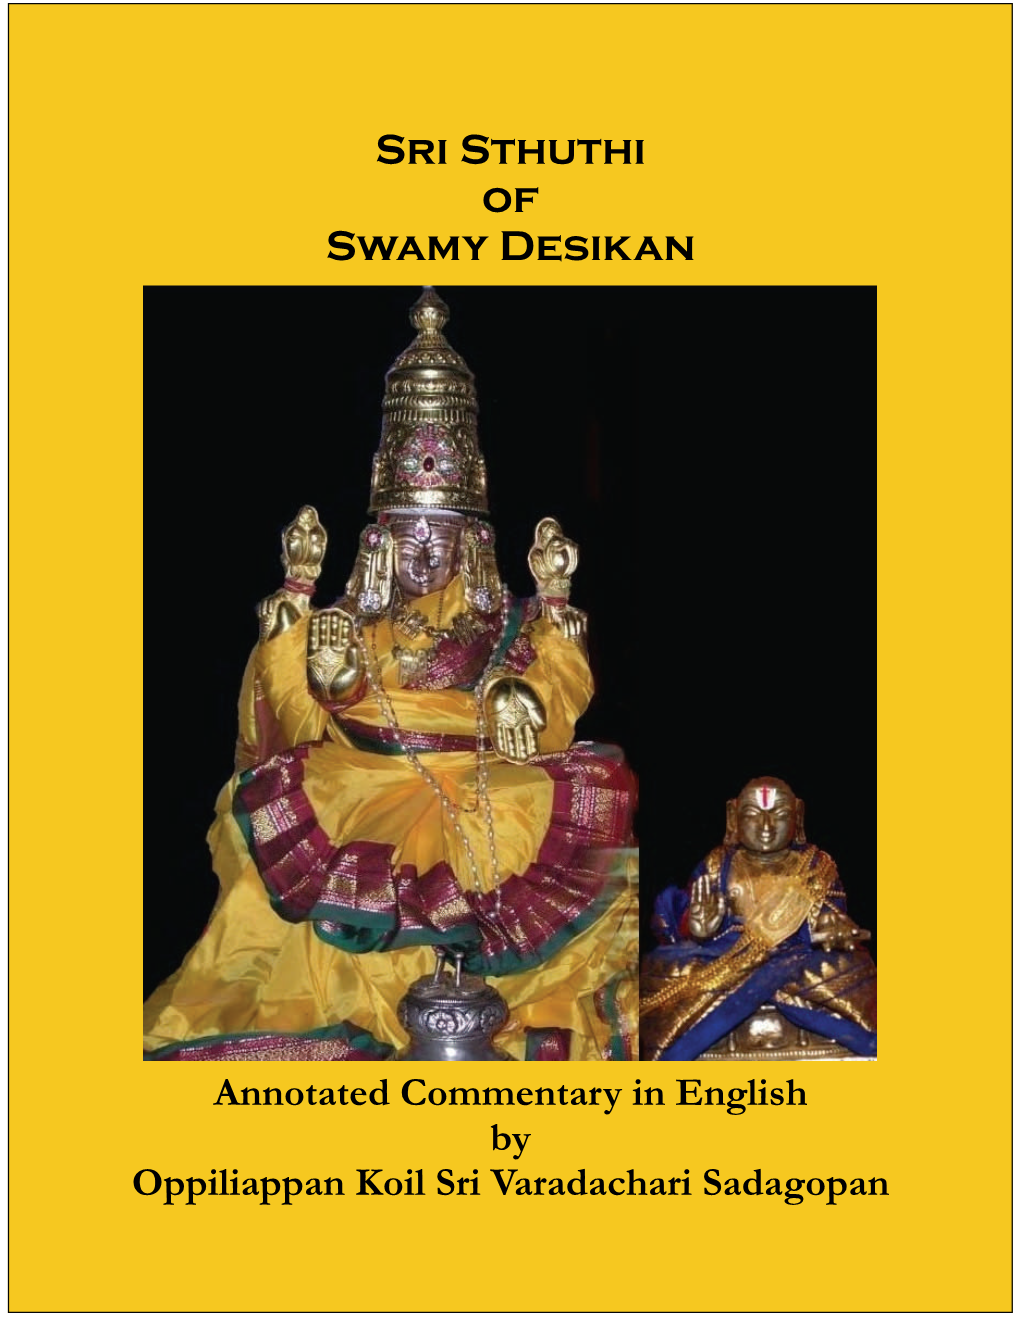 Sri Sthuthi of Swamy Desikan